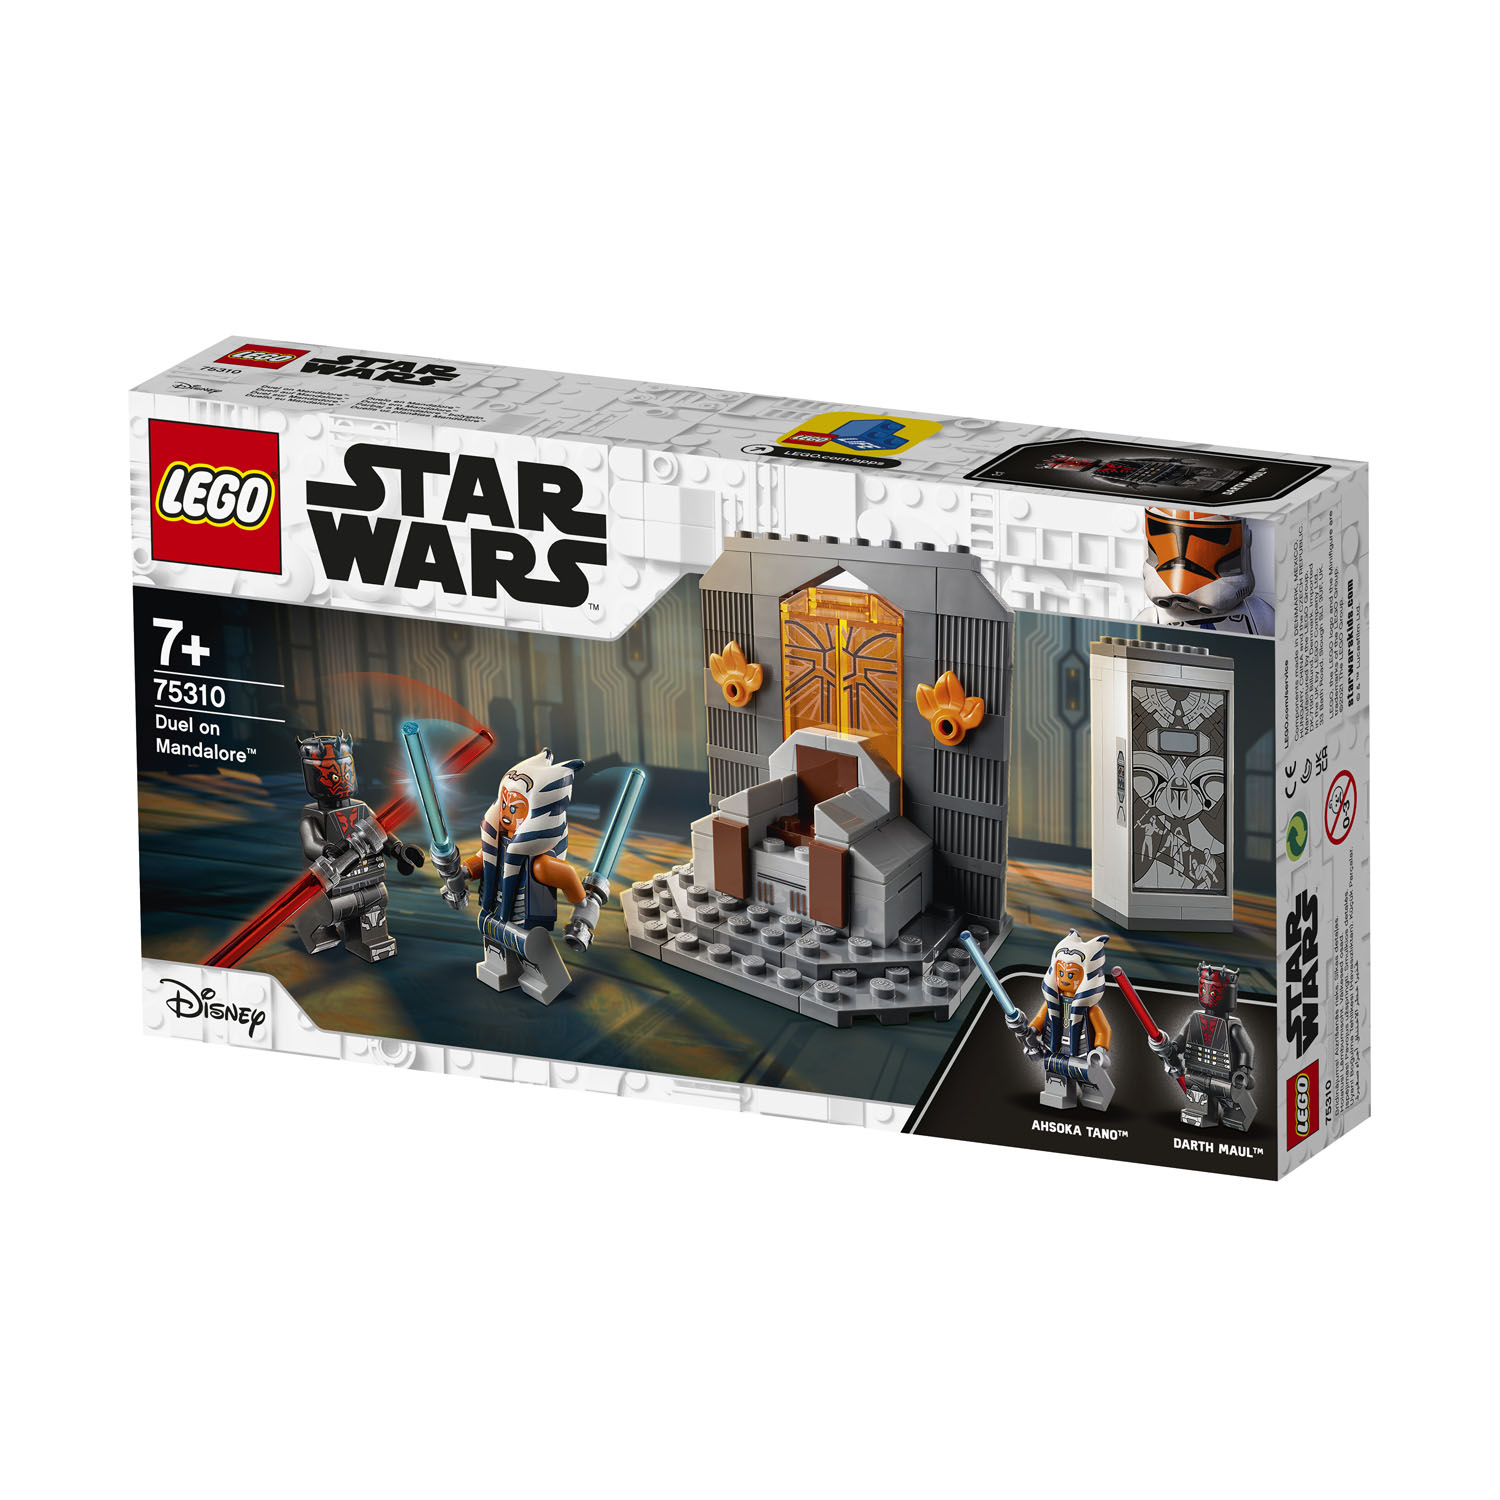 LEGO STAR WARS TM 75310 DUEL OP MANDALORE